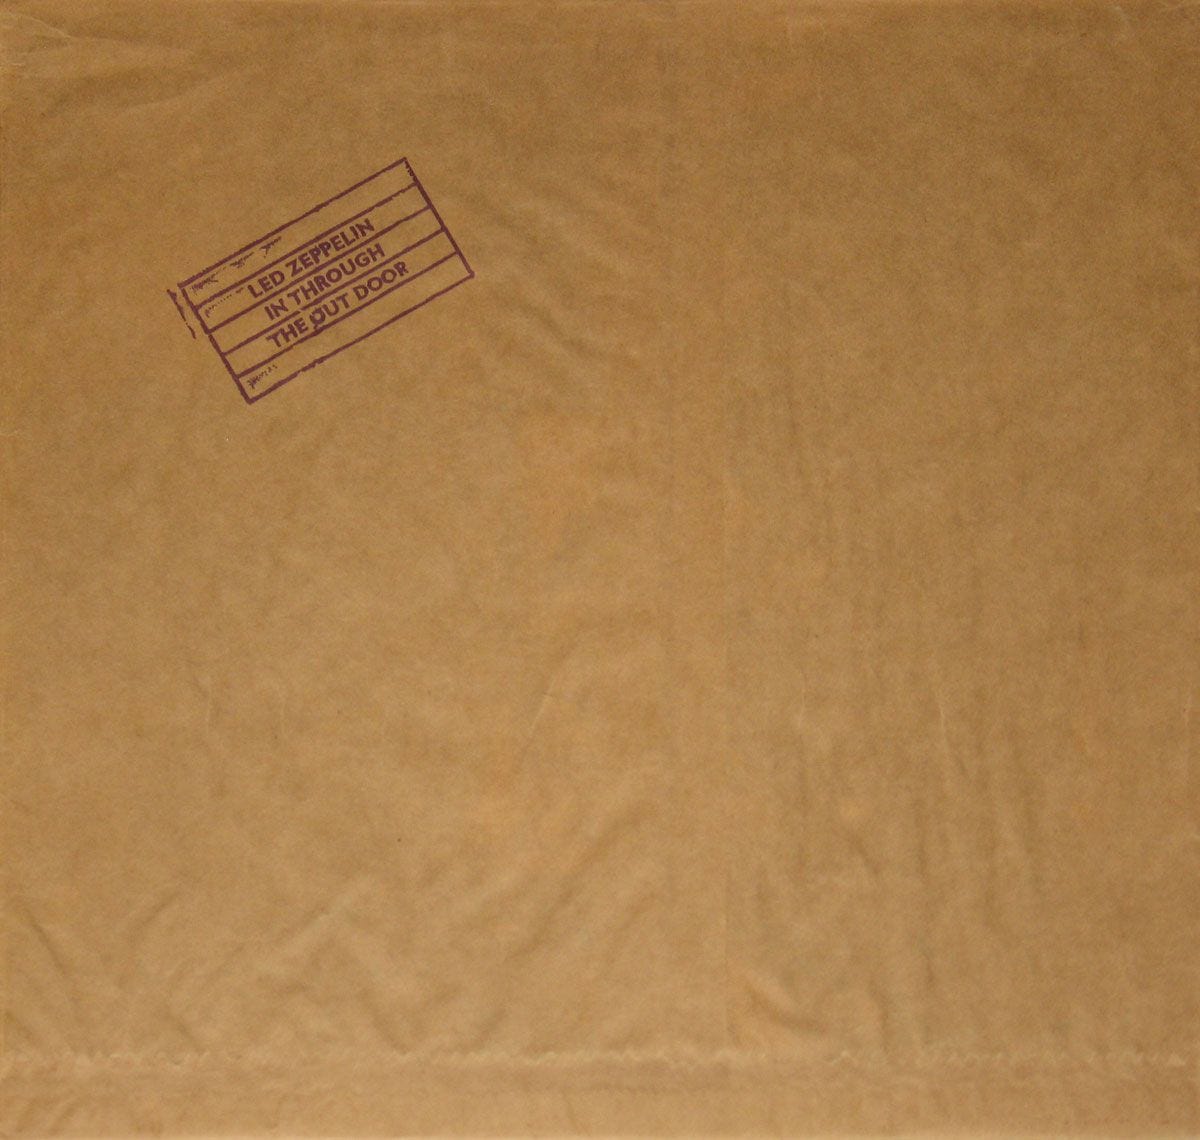 LED ZEPPELIN In Through The Out Door w/Paper Bag 12" LP Vinyl Album Cover Gallery & Information ...